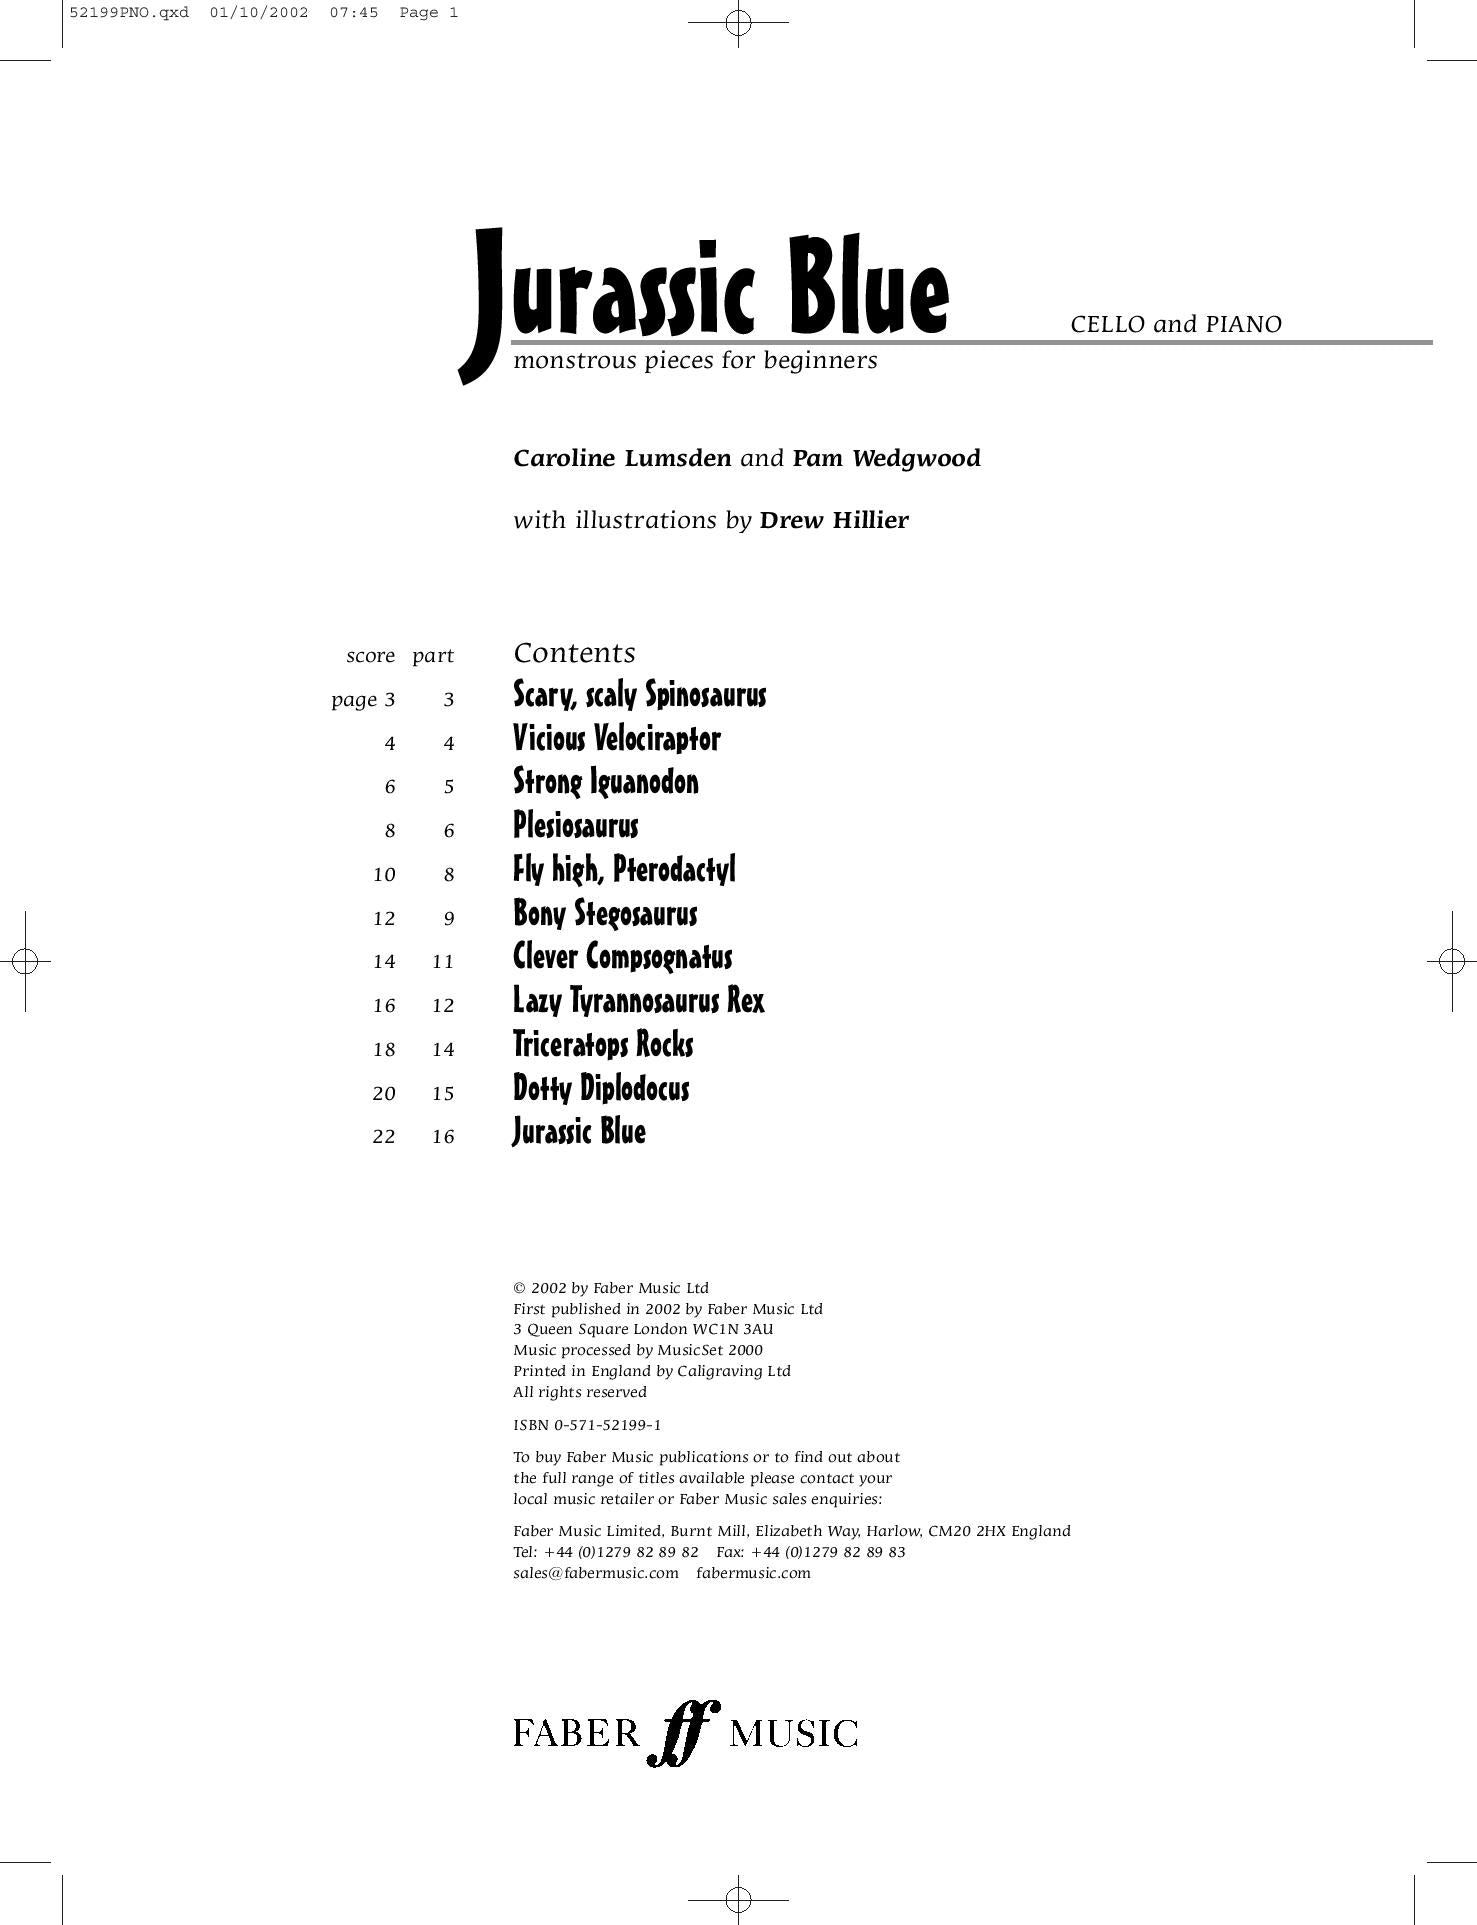 Jurassic Blue for Cello and Piano